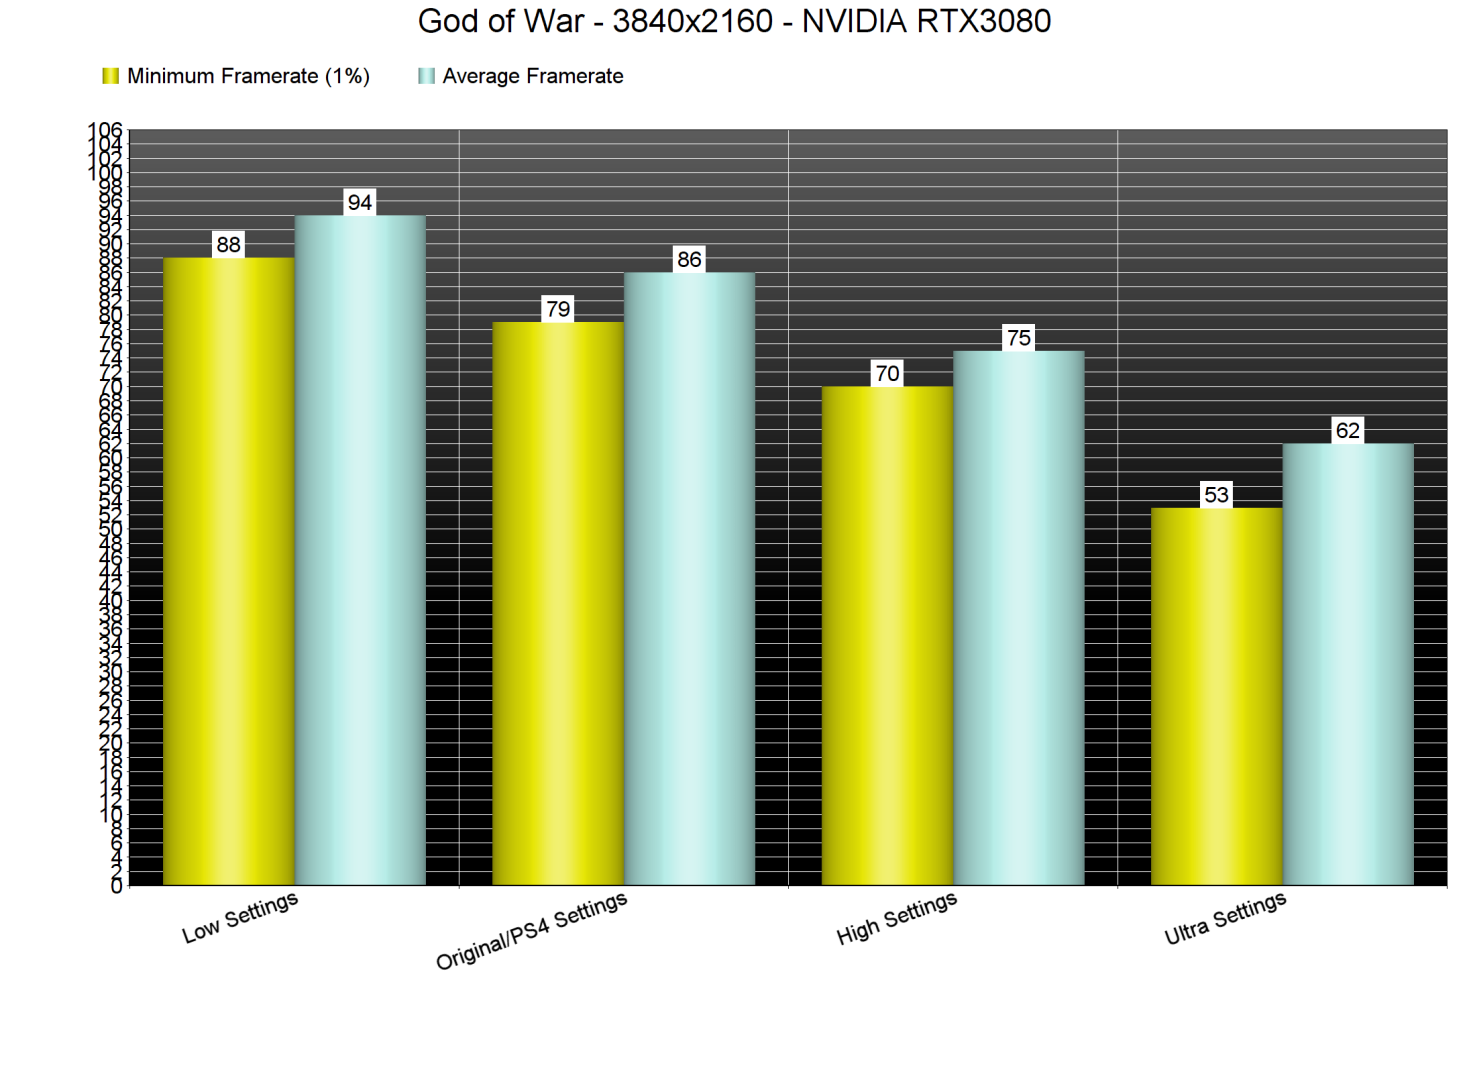 God of War graphics settings benchmarks